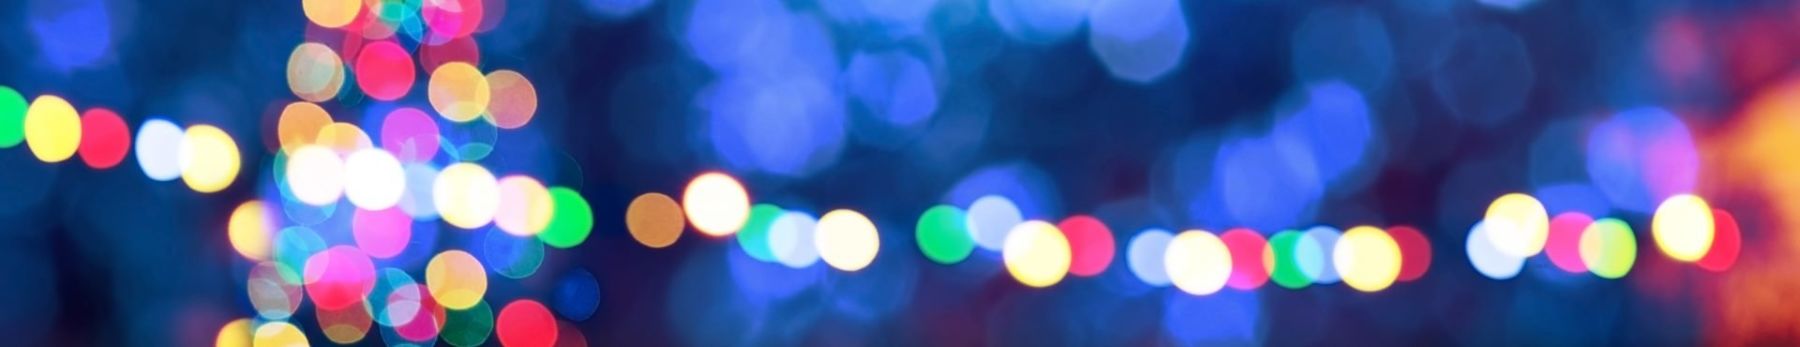 Shine Lawyers | Blurred Christmas lights | Shine Lawyers